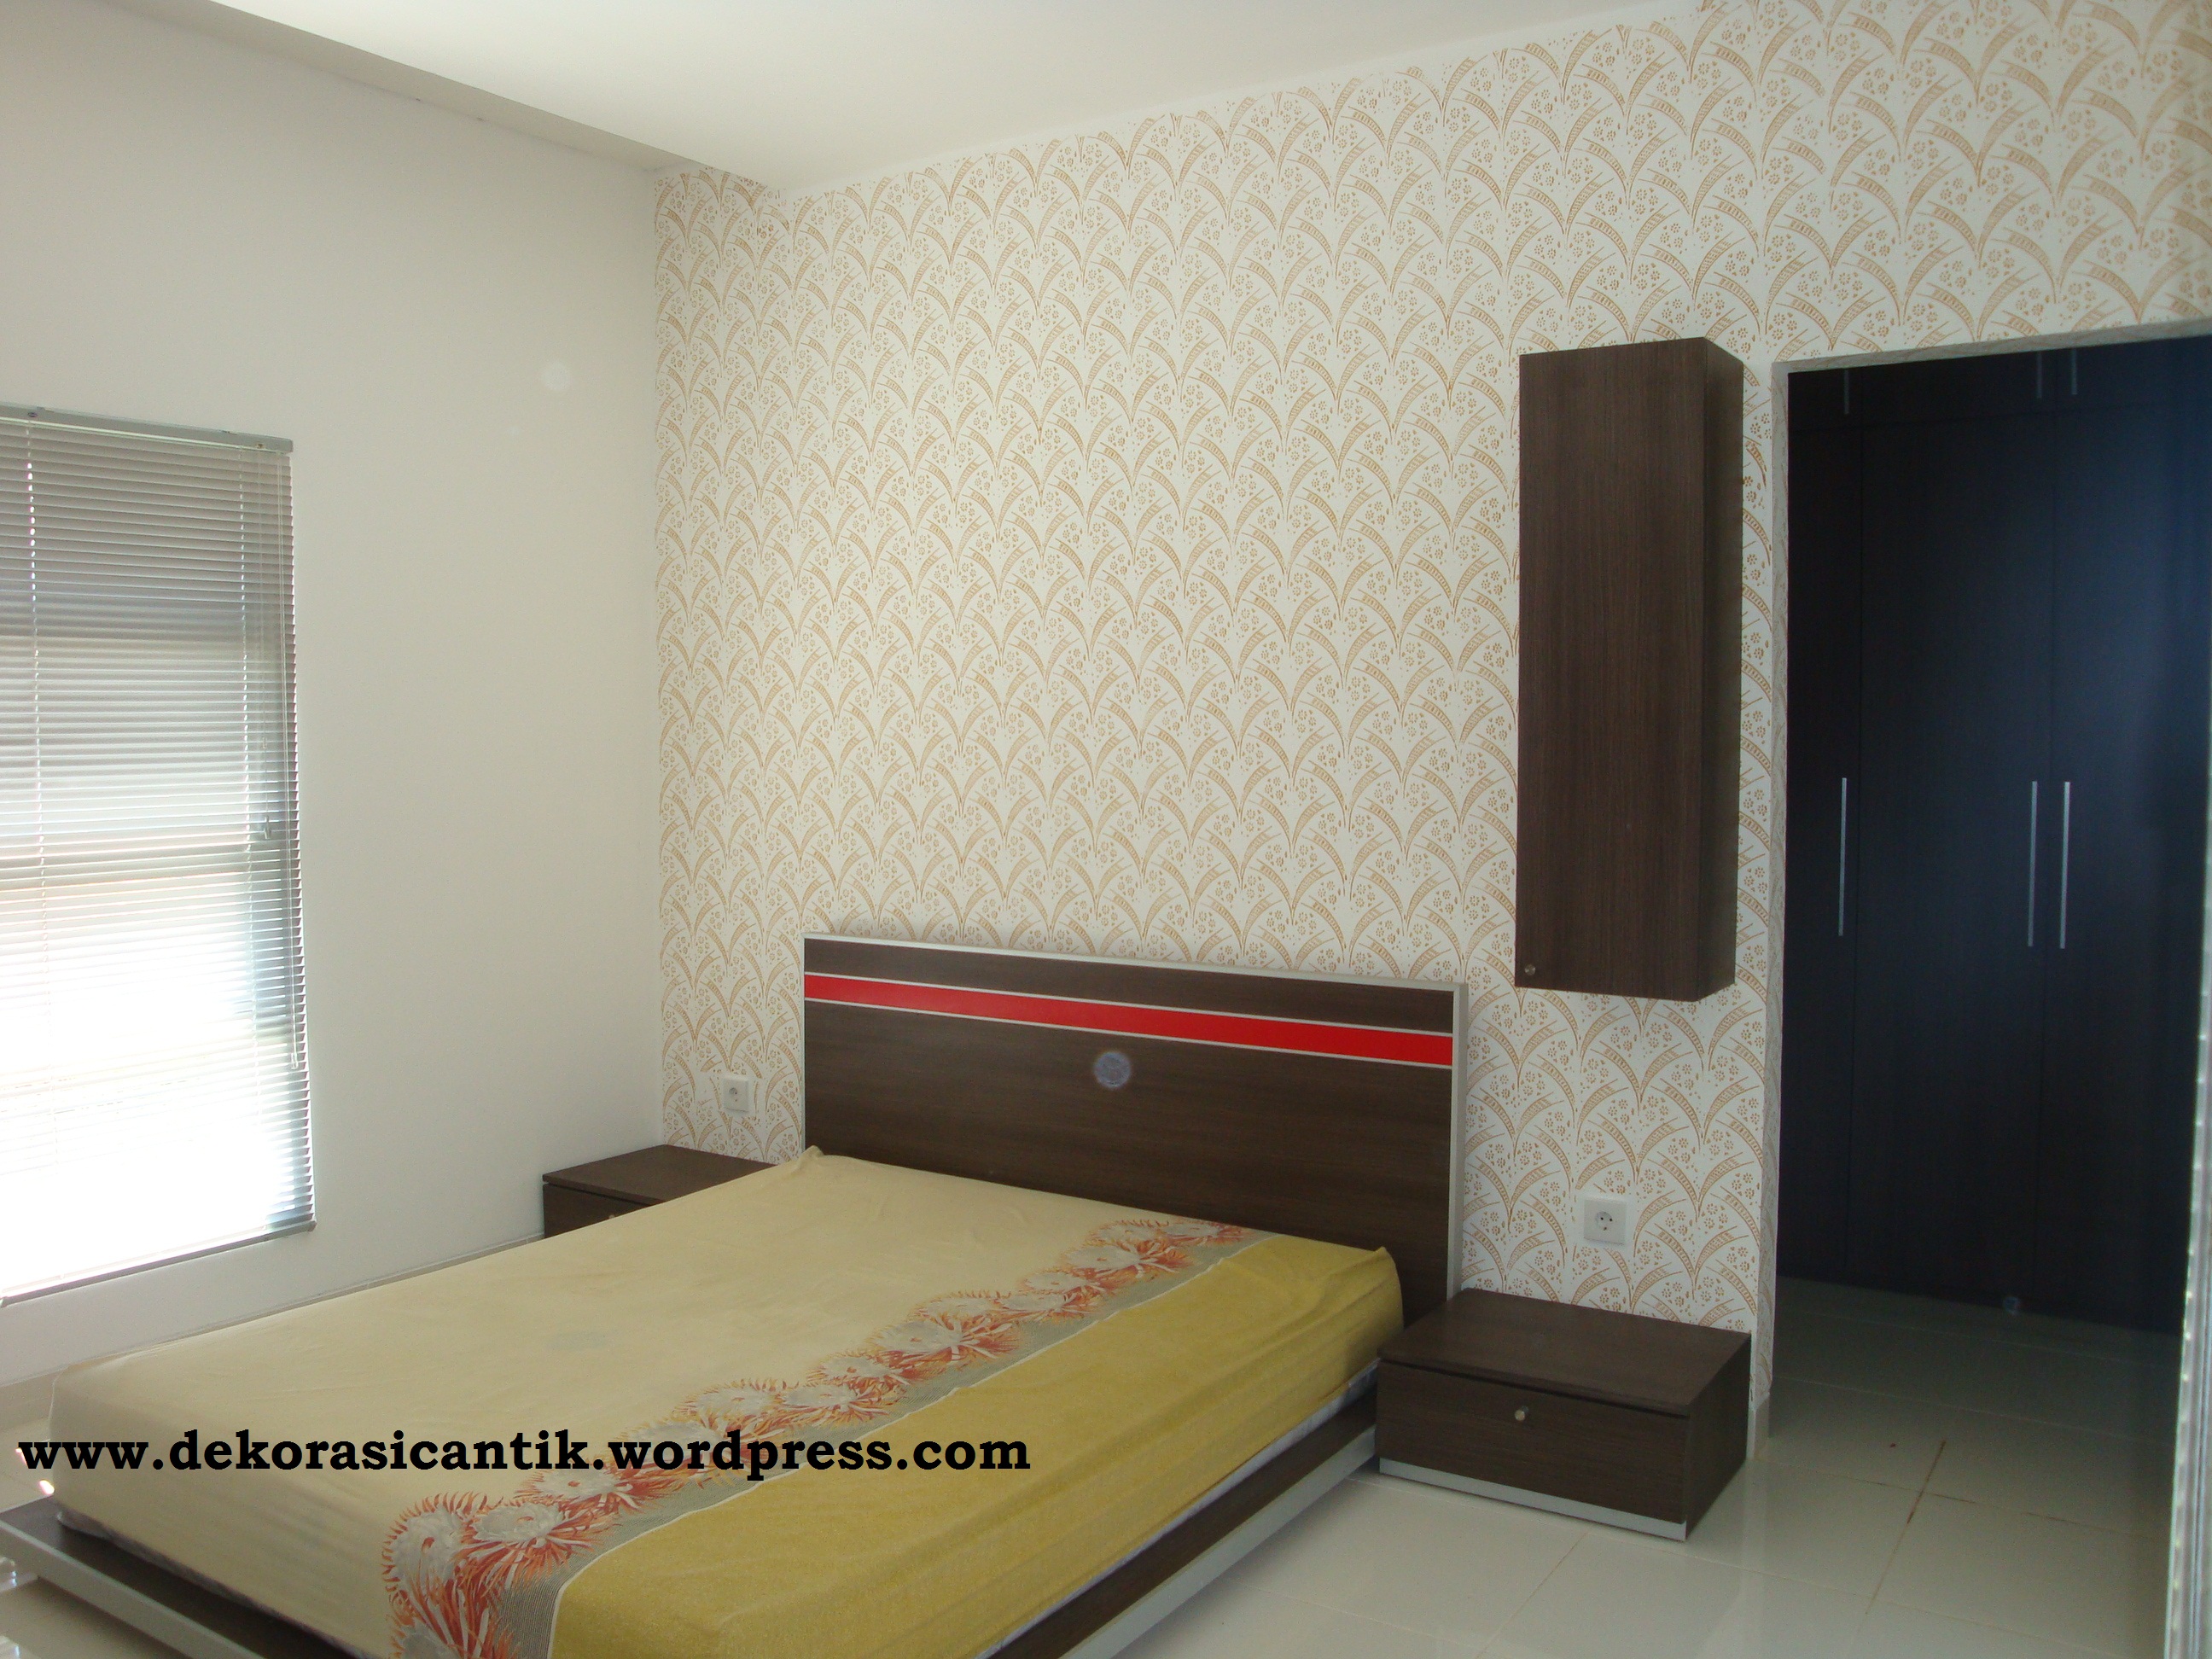 wallpaper dinding kamar tidur romantis,property,room,furniture,bedroom,interior design